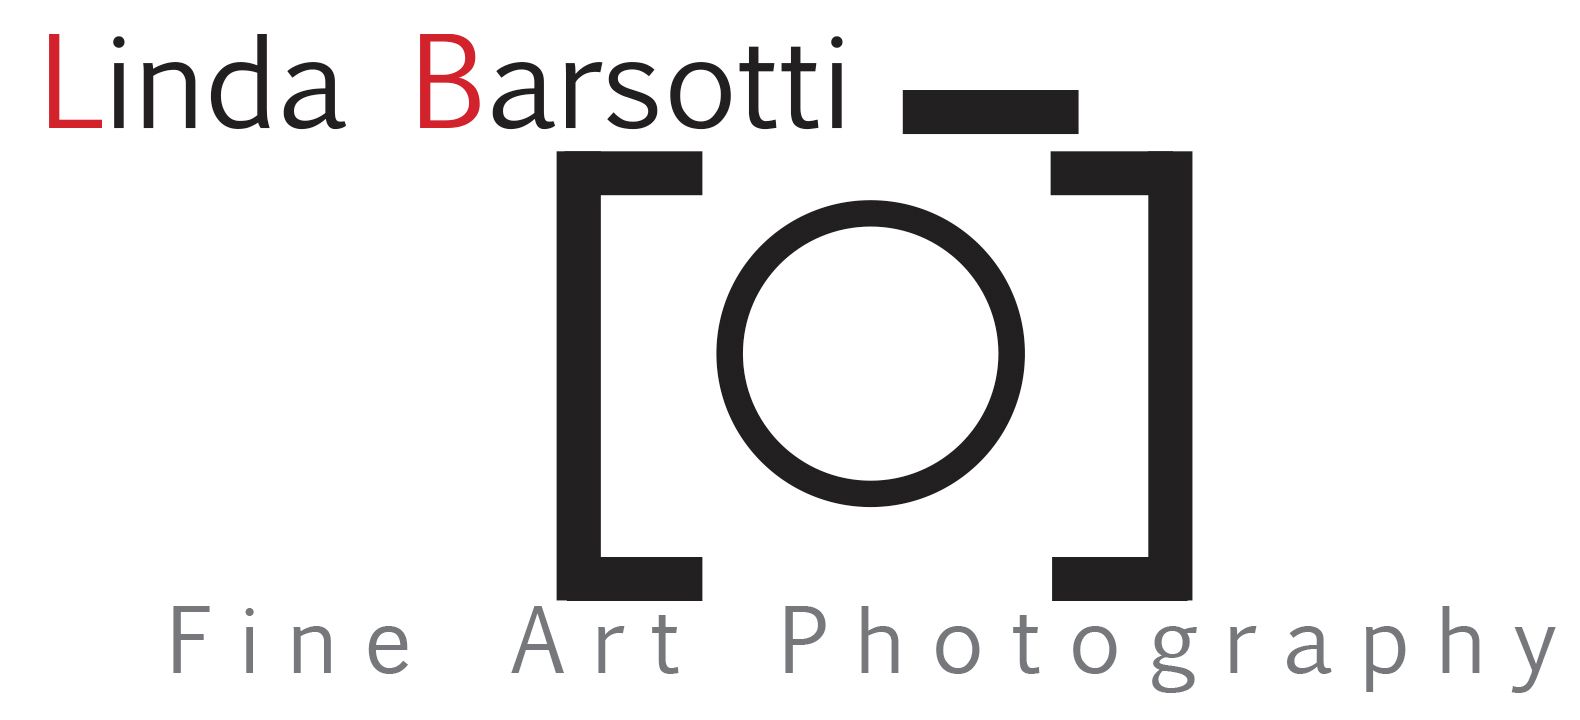 Linda Barsotti Fine Art Photography